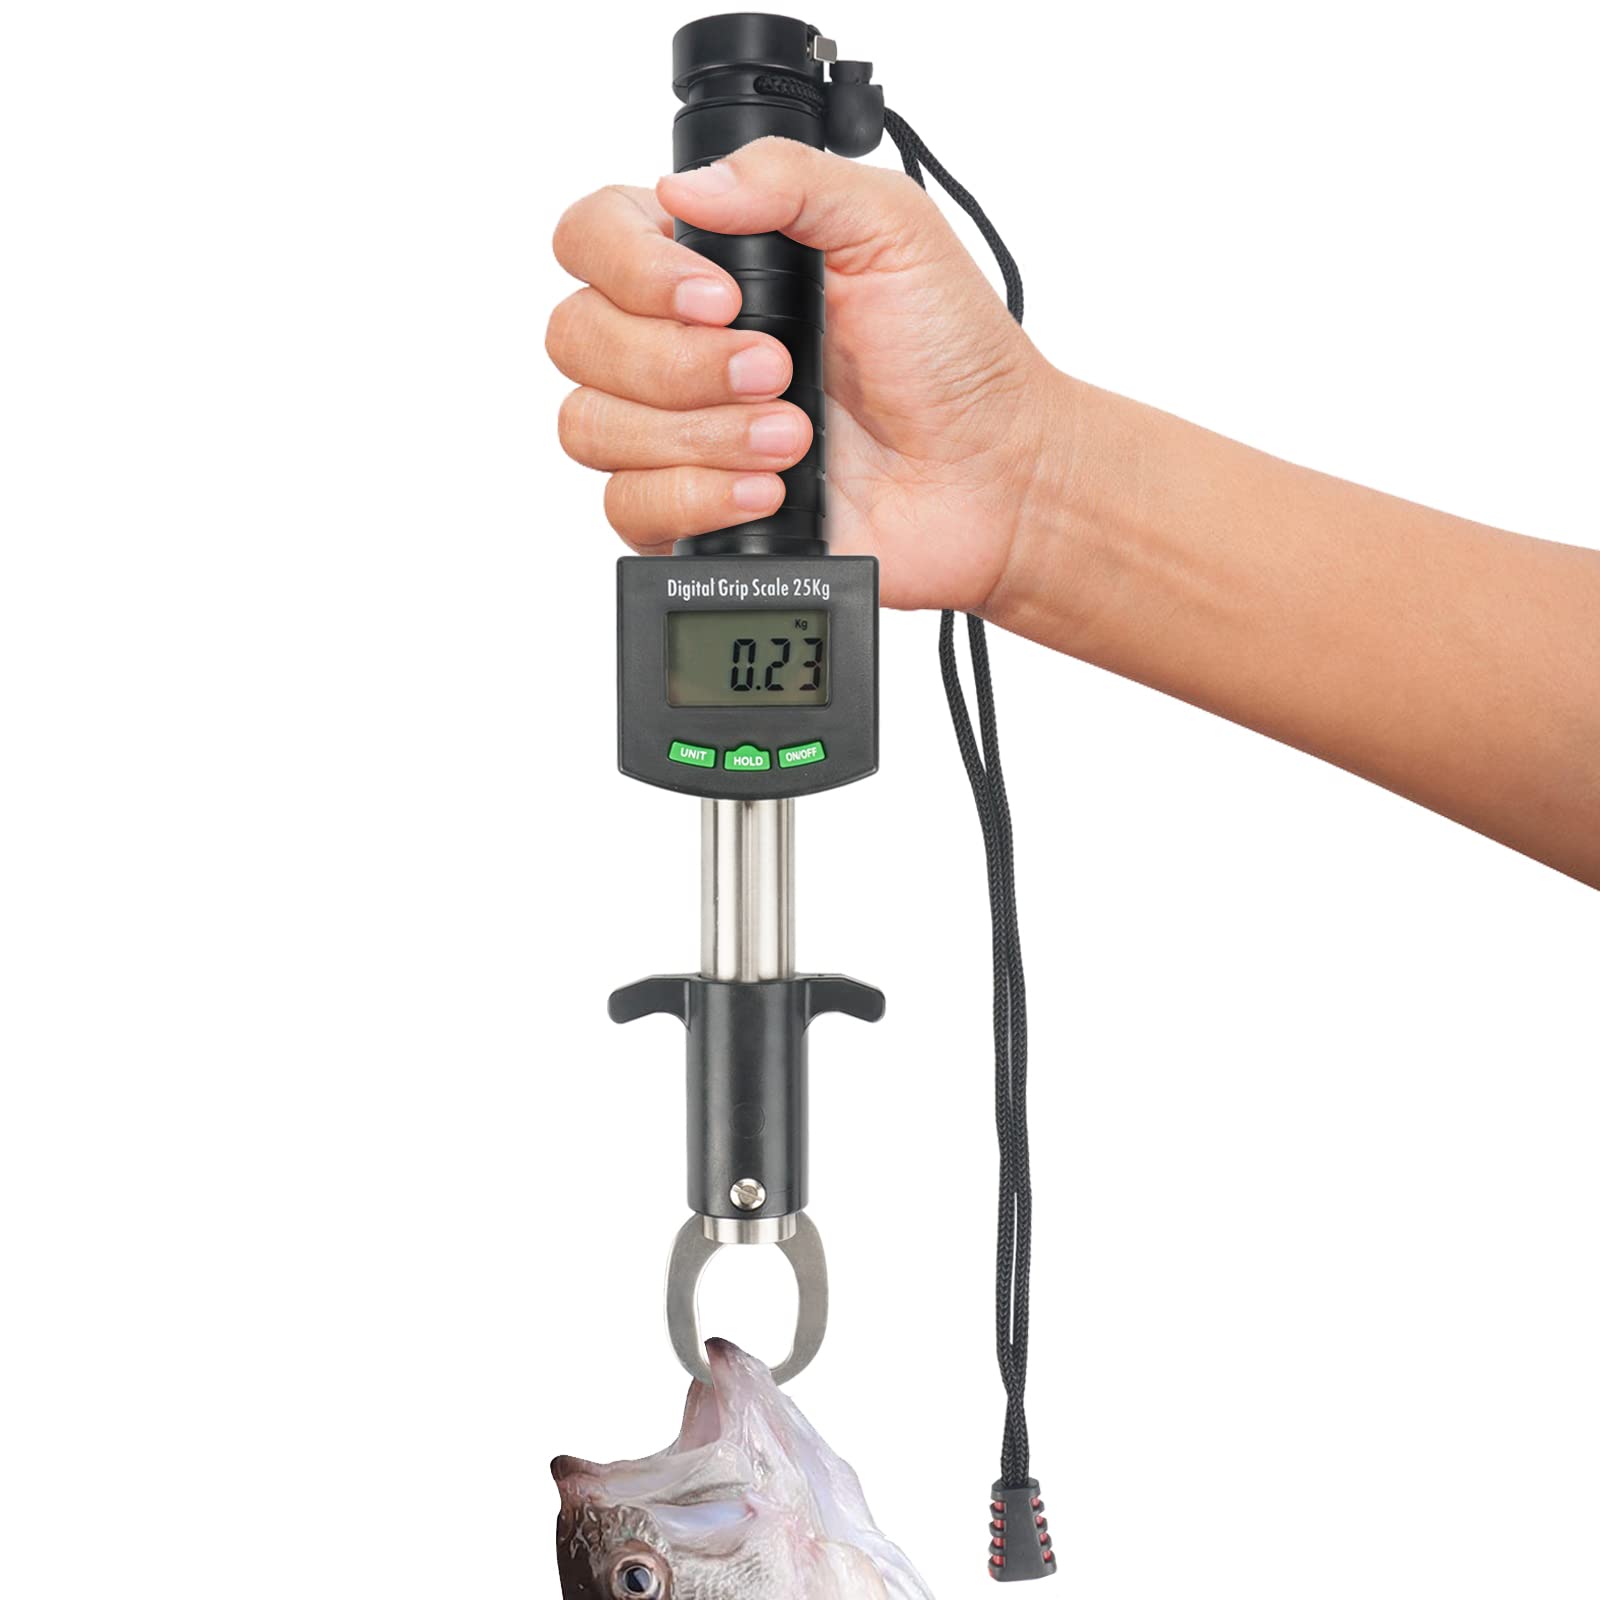 MAVRICMANN Fish Scale, Fish Gripper with Digital Scale, Waterproof